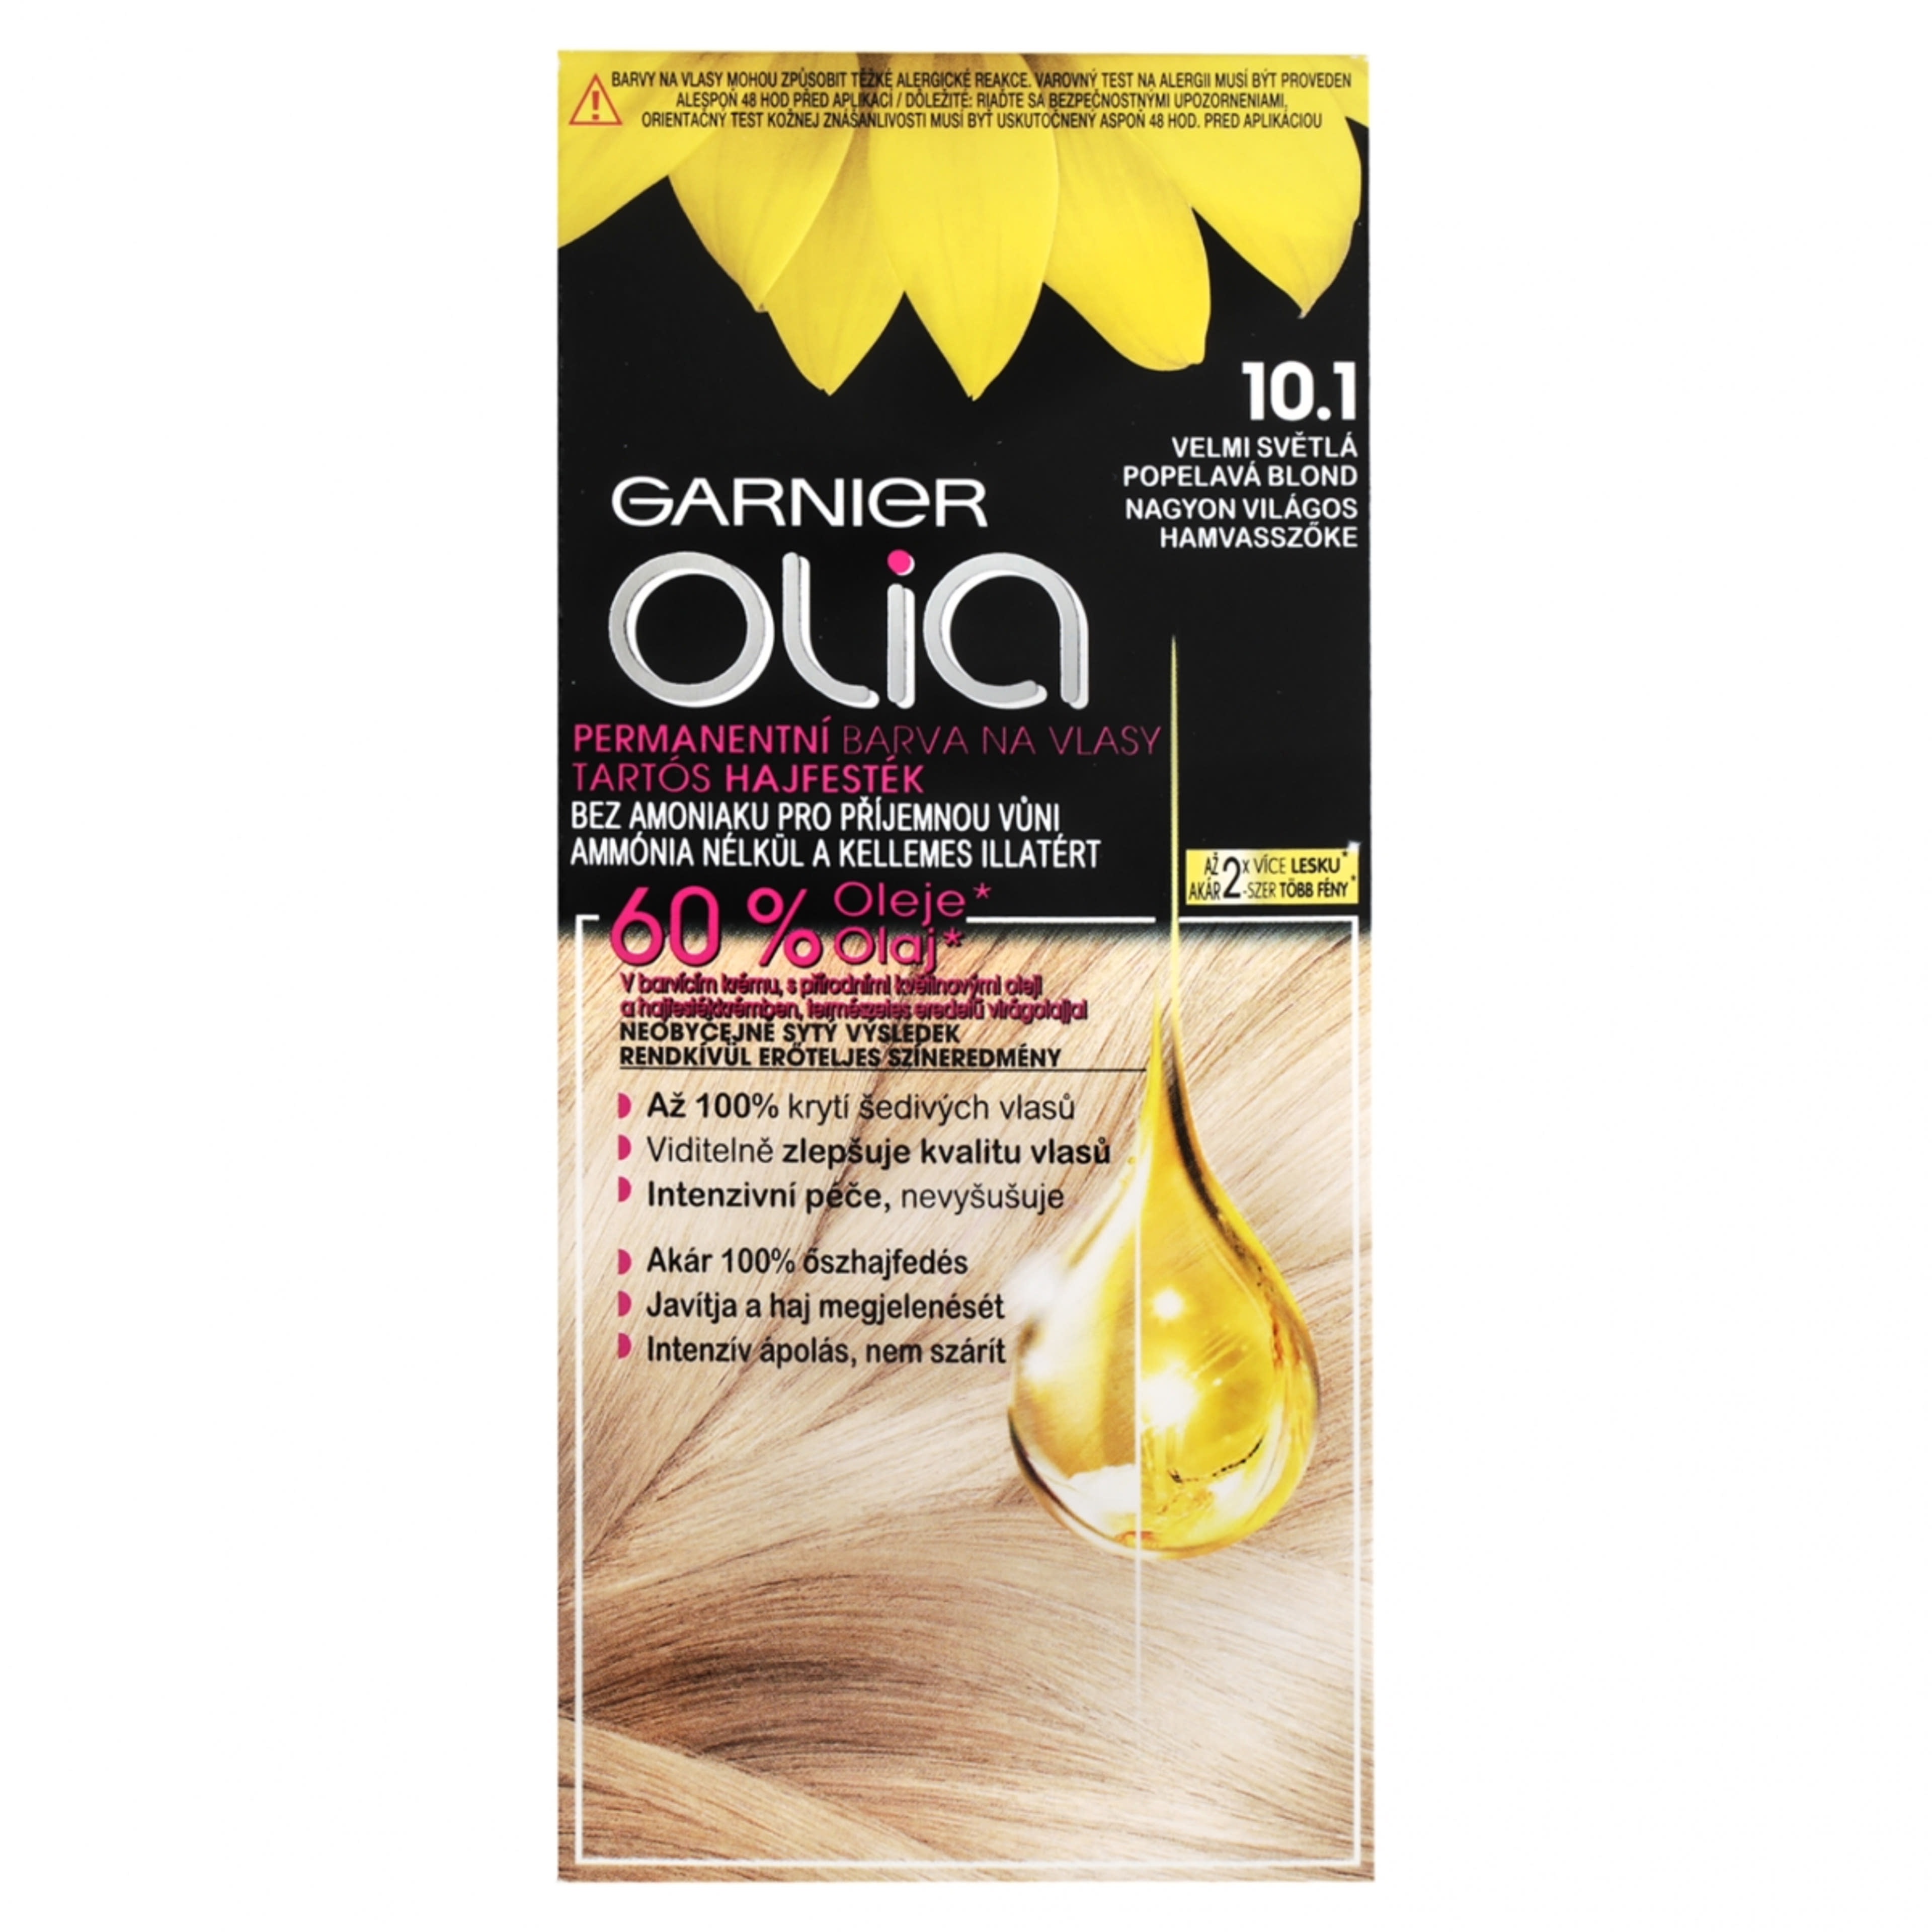 Garnier Olia tartós hajfesték 10.1 Nagyon világos hamvasszőke - 1 db-1